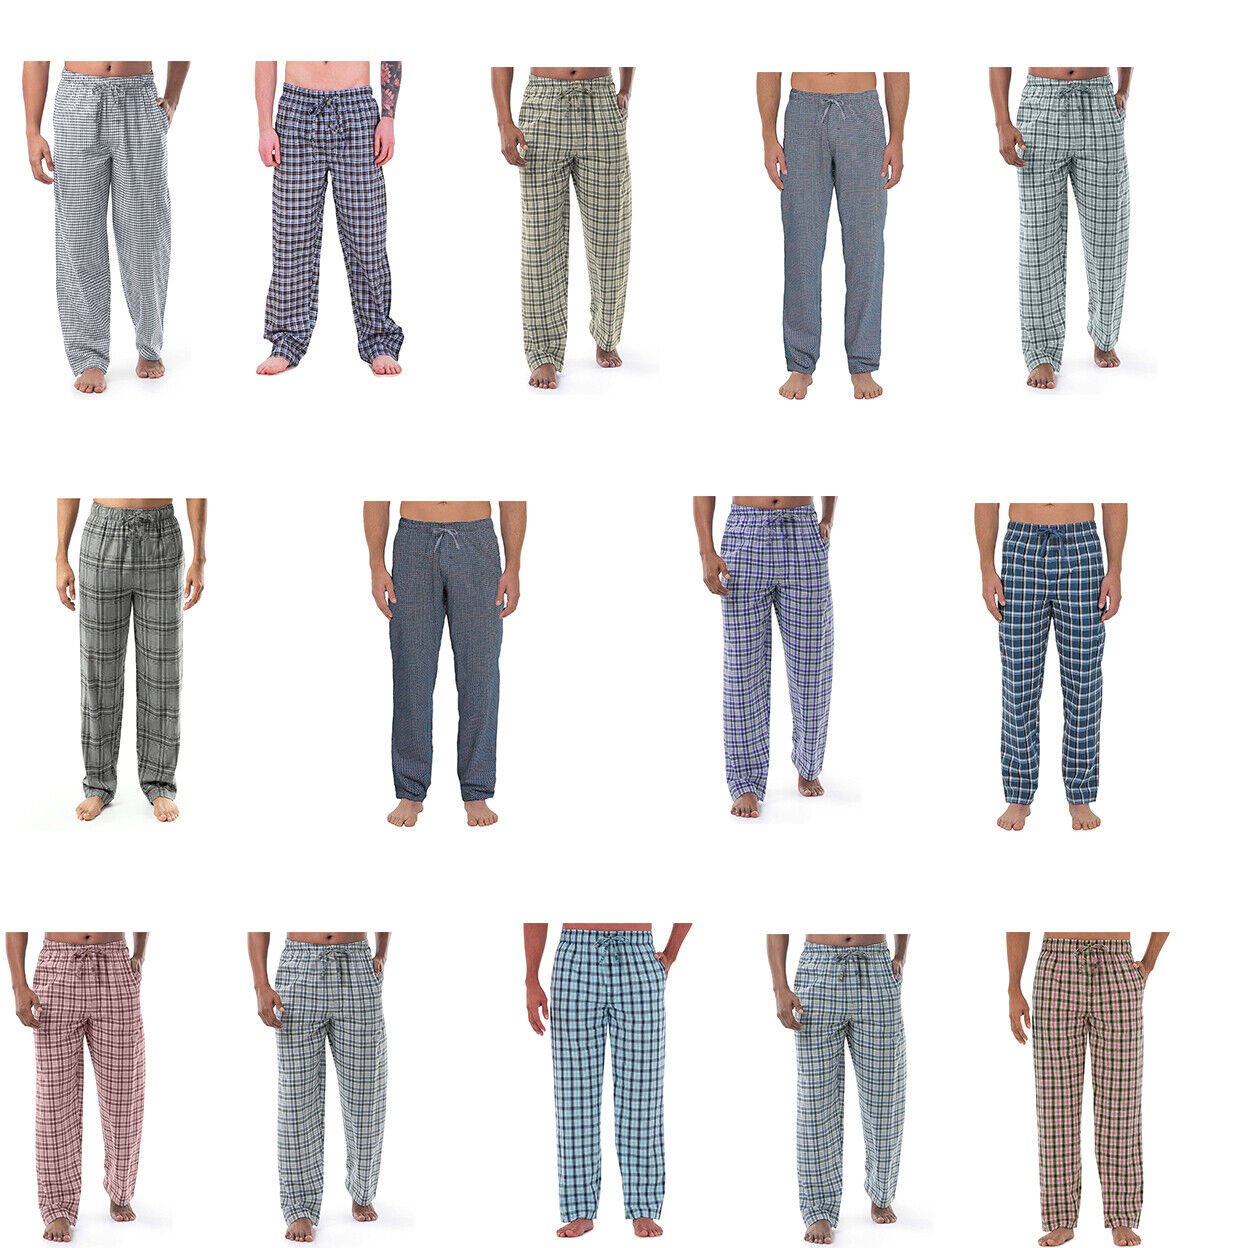 Men's Ultra-Soft Plaid Cotton Jersey Knit Comfy Sleep Lounge Pajama Pants - Beige, Medium